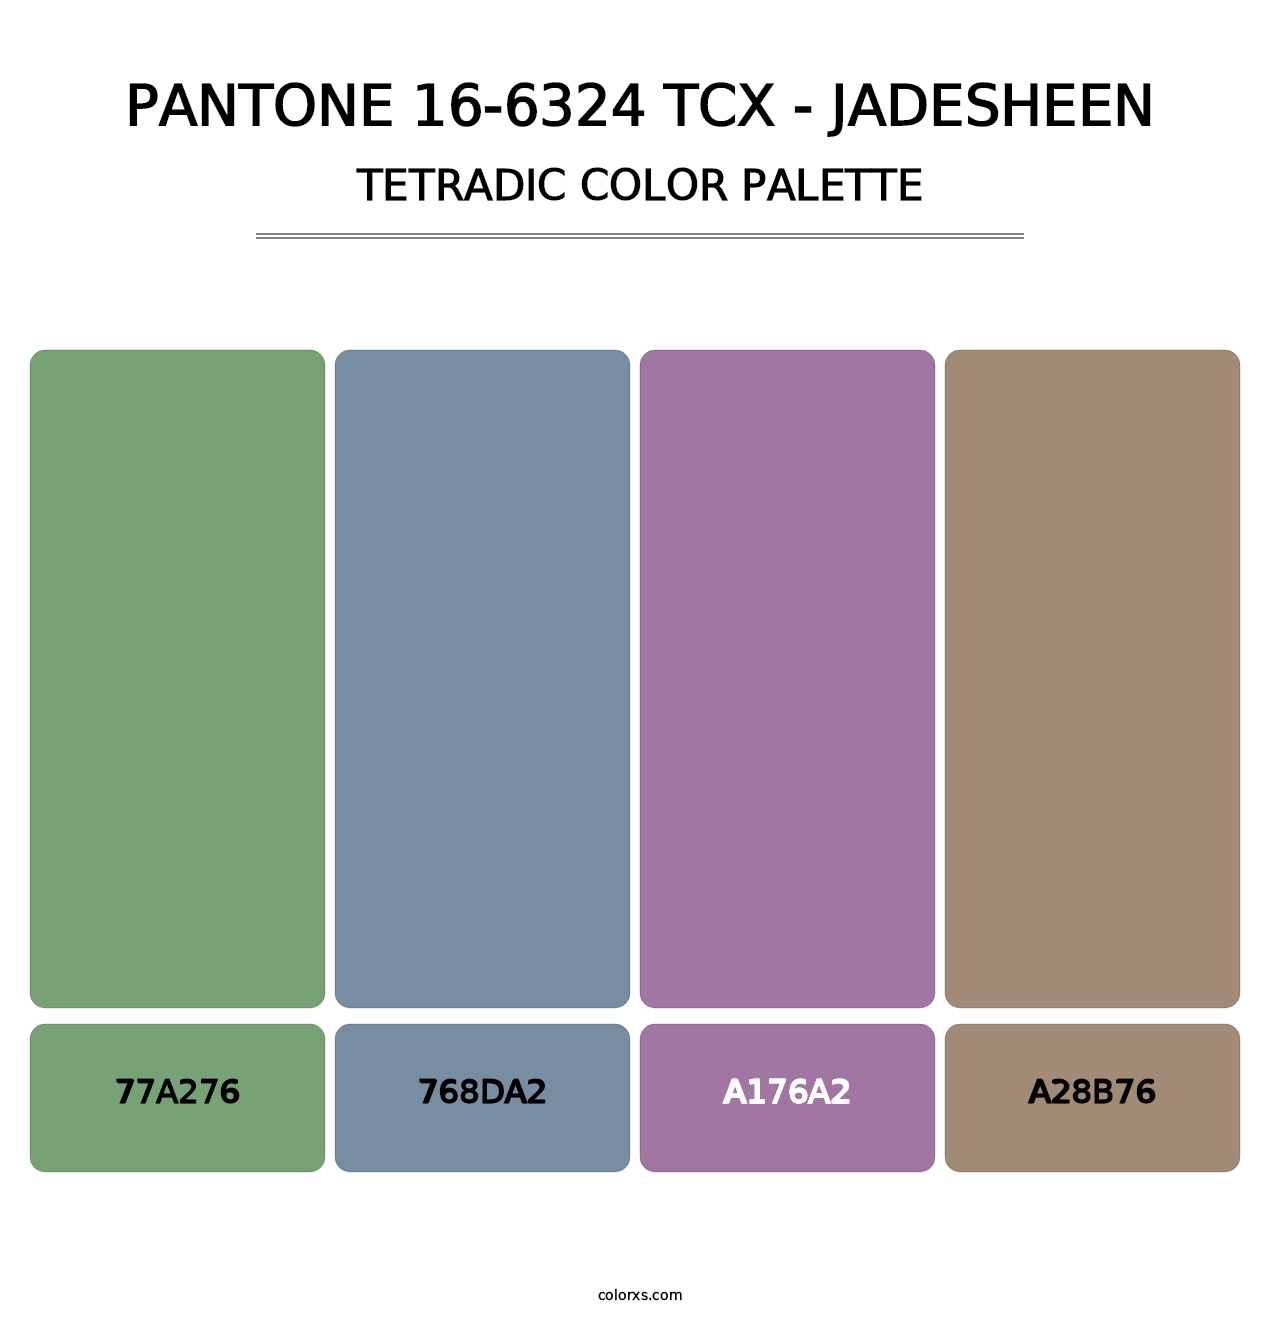 PANTONE 16-6324 TCX - Jadesheen - Tetradic Color Palette